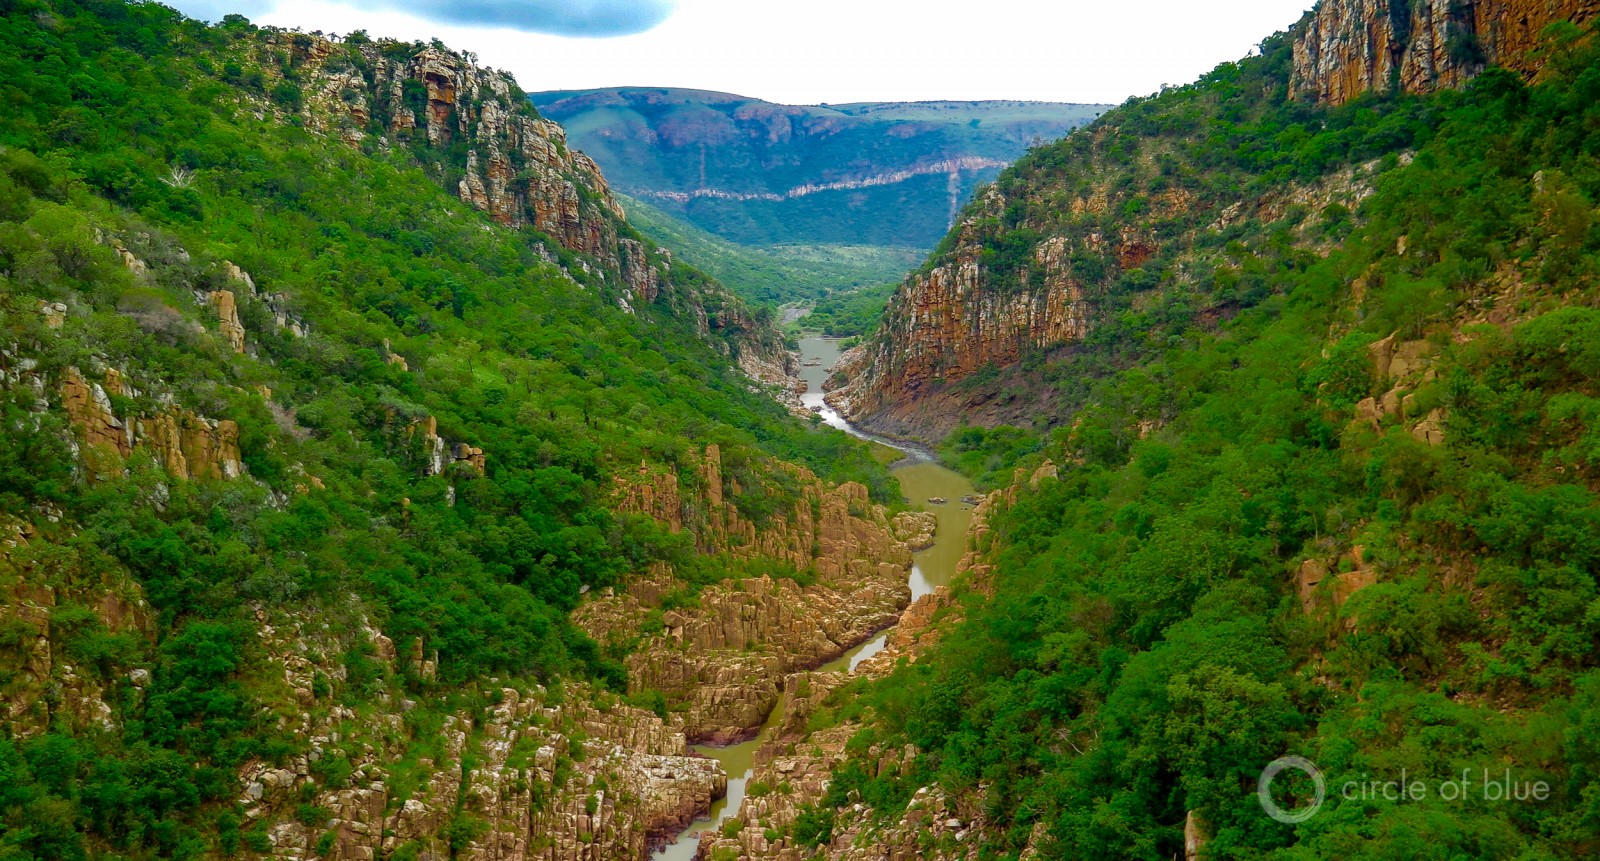 Bivane gorge upstream of Pongola in northern Kwazulu-Natal province.